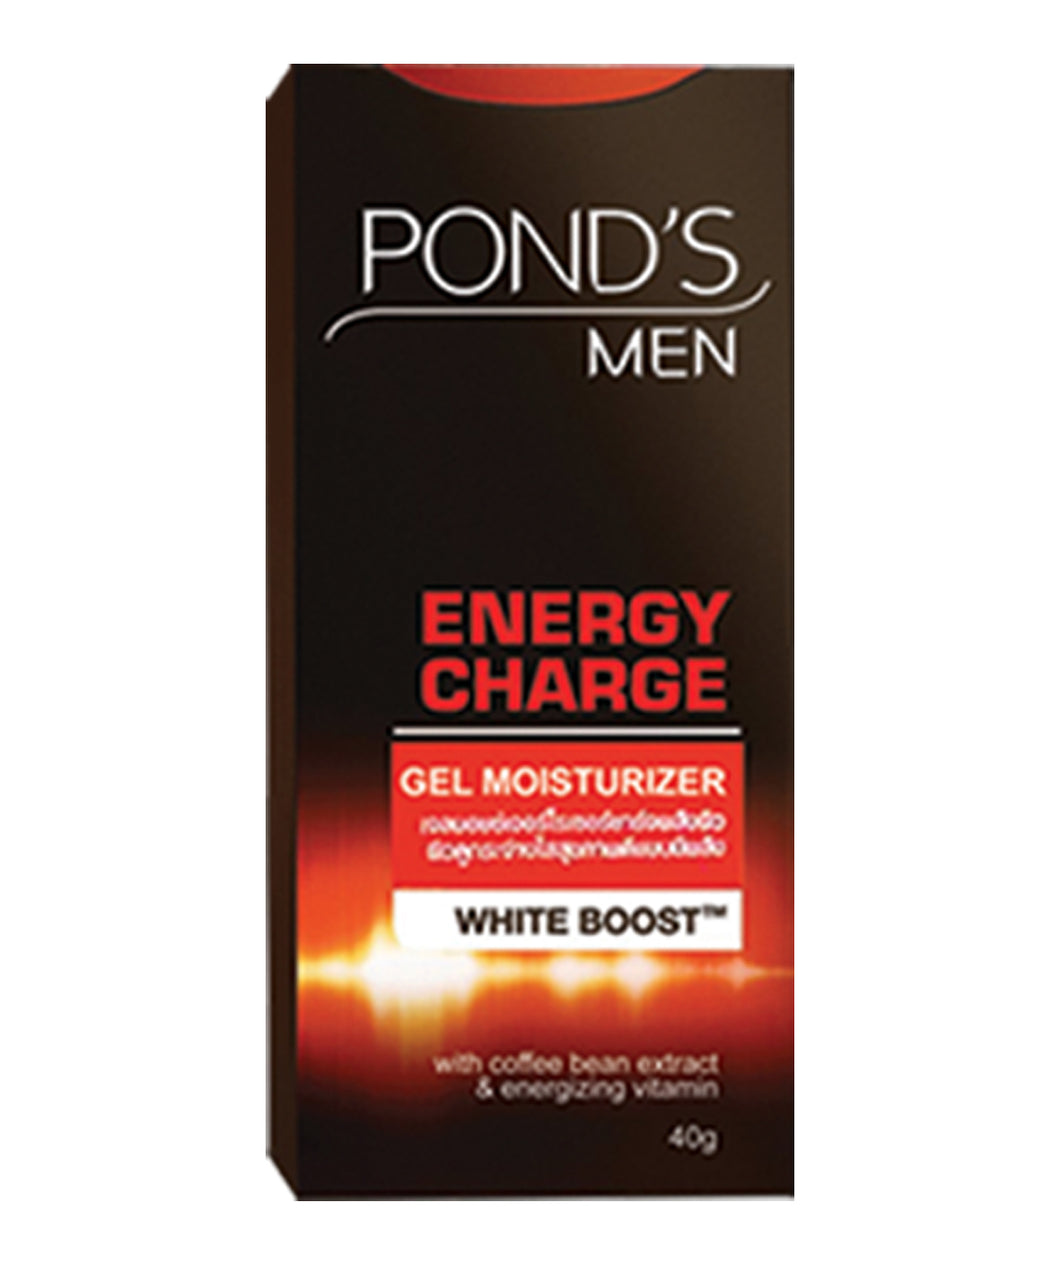 POND'S Men Energy Charge Moisturizer - 40 g